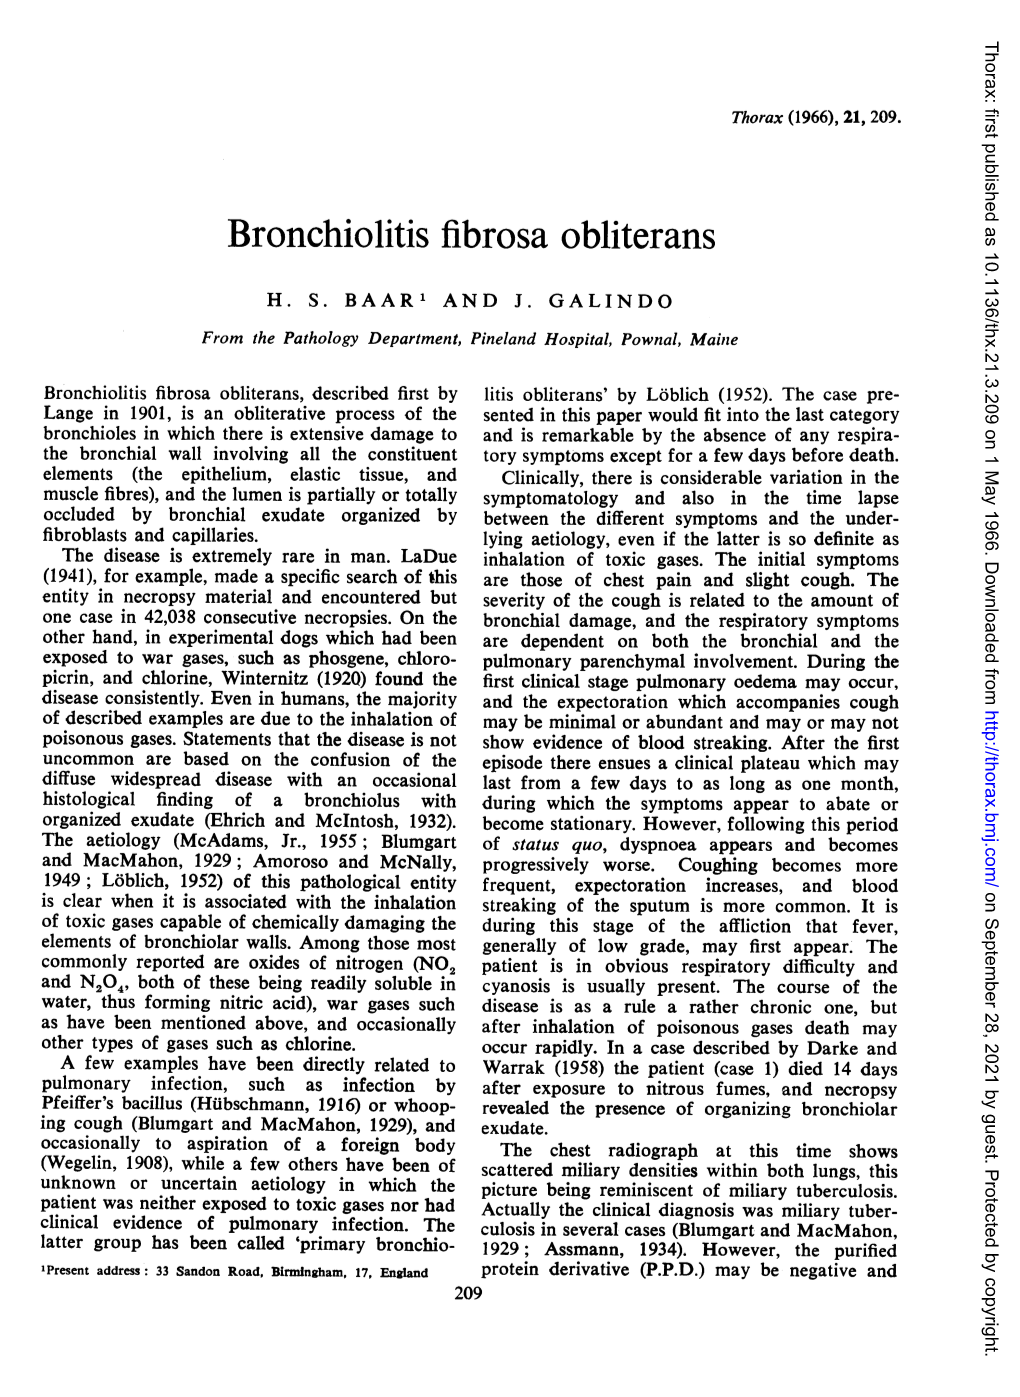 Bronchiolitis Fibrosa Obliterans